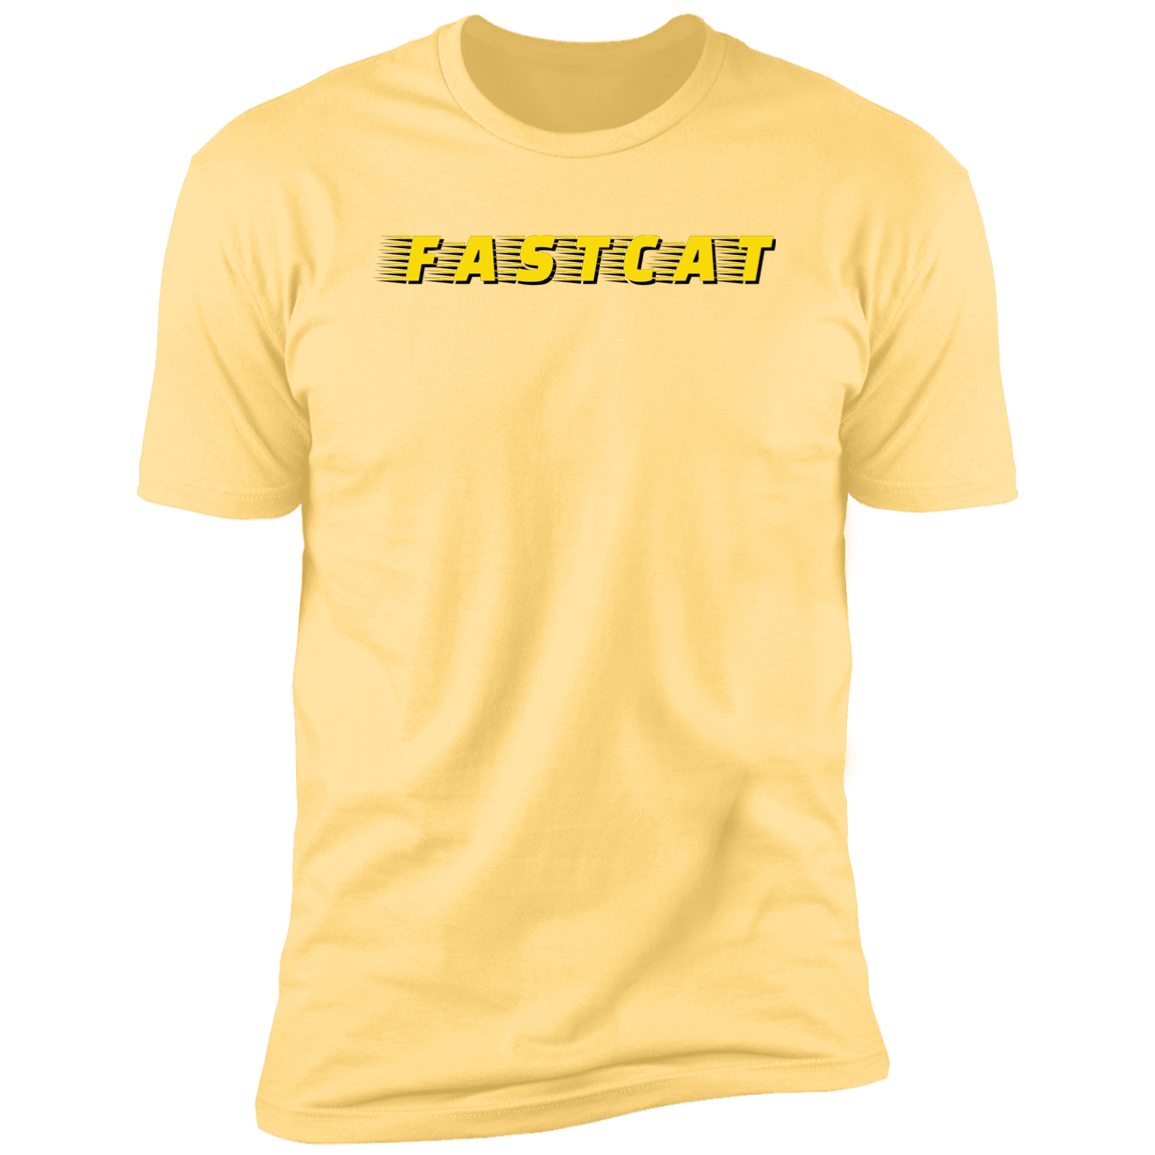 FastCAT Dog T-shirt, sporting dog t-shirt for humans, FastCAT t-shirt, in banana creamFastCAT Dog T-shirt, sporting dog t-shirt for humans, FastCAT t-shirt, in banana cream